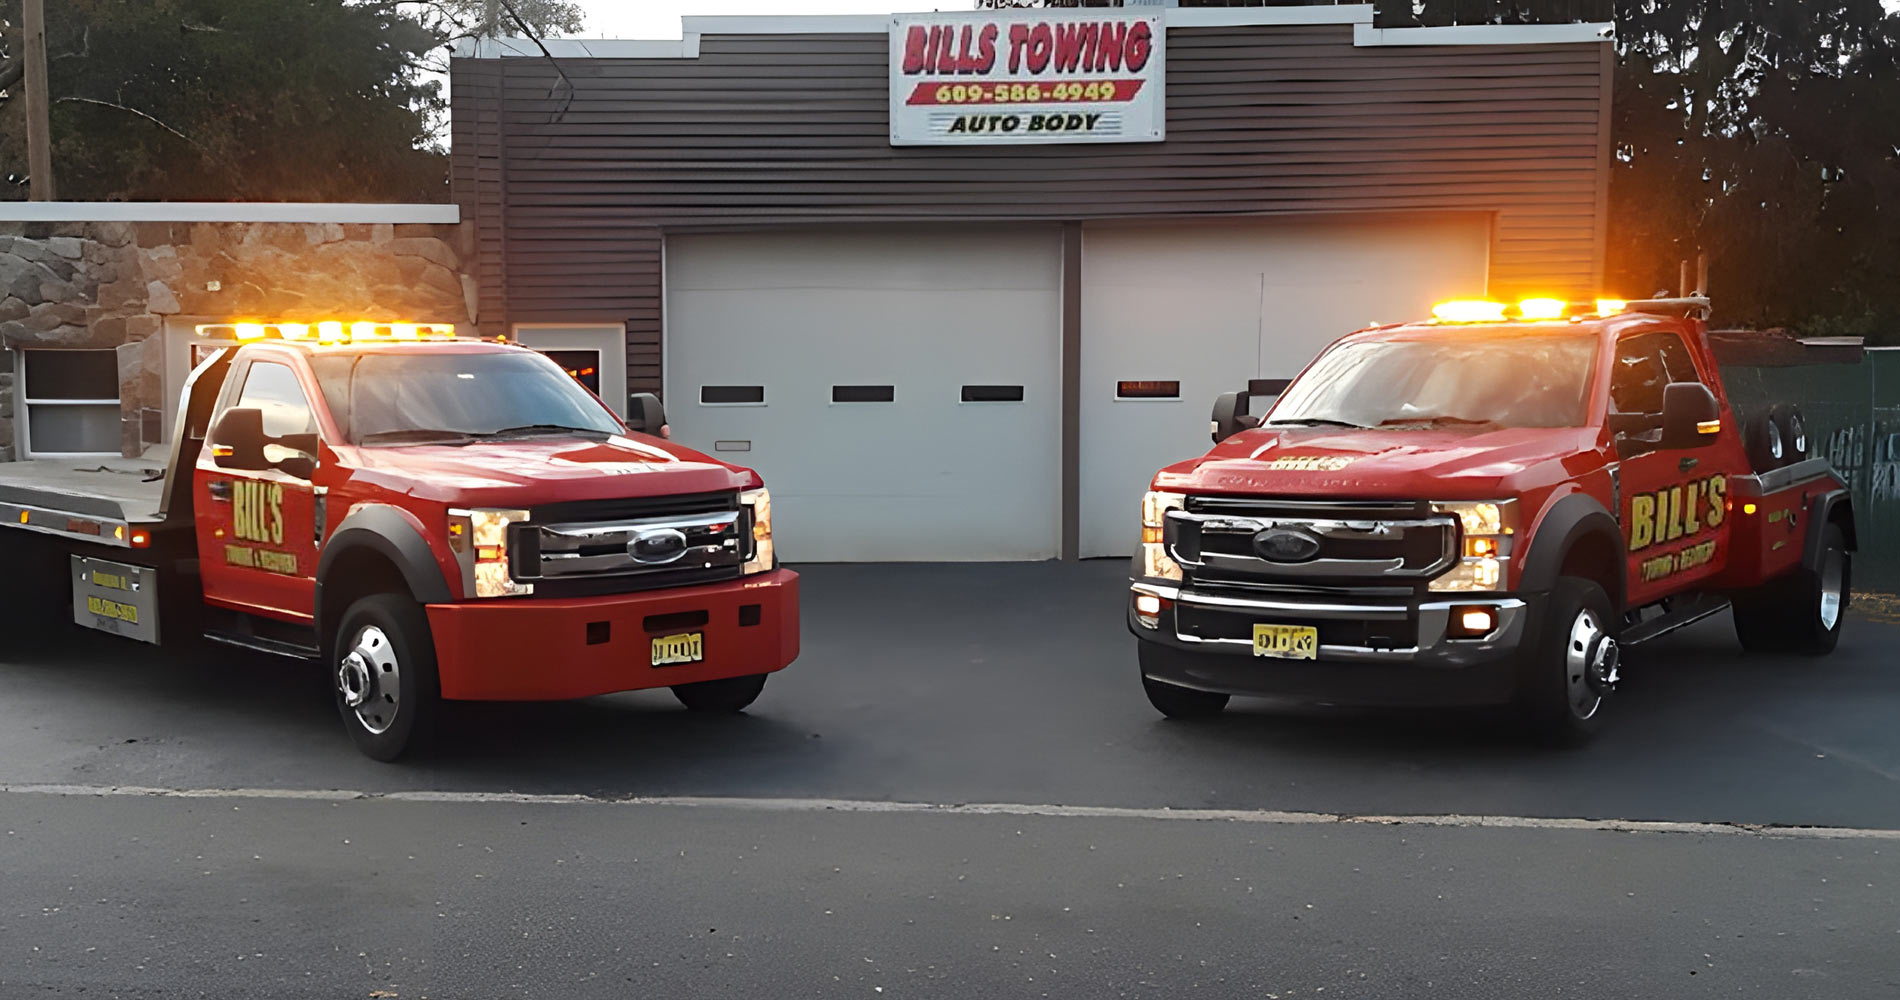 Bill's Towing | Ewing, NJ